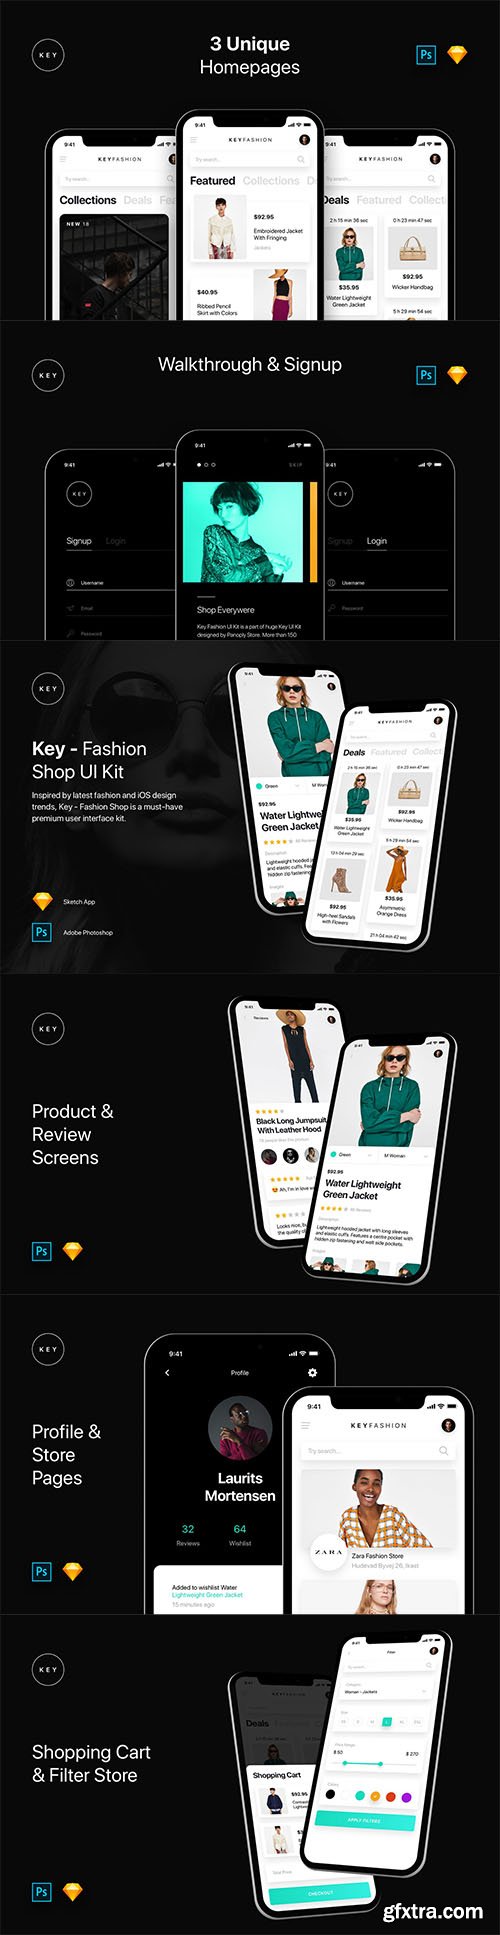 Key - Fashion Shop UI Kit